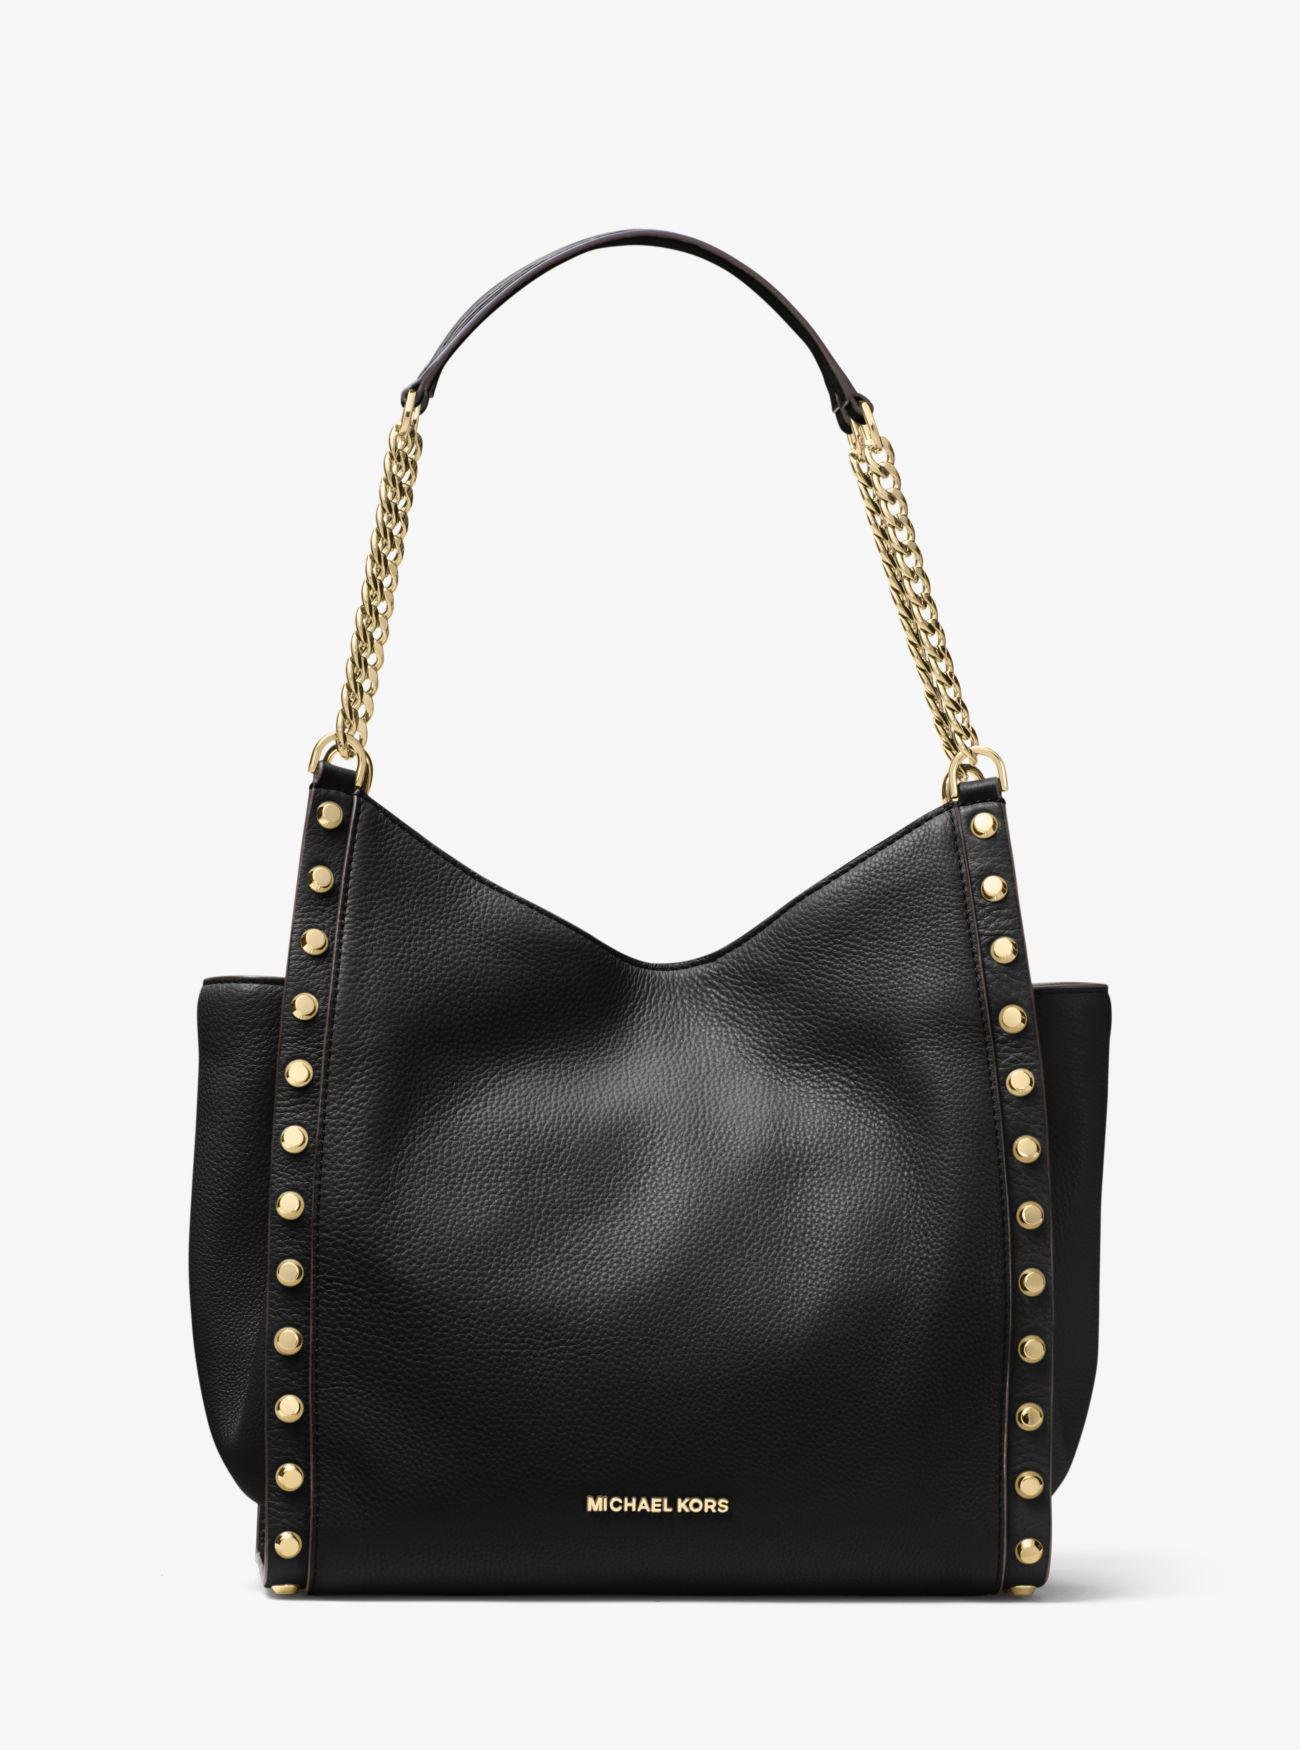 Michael Kors White Studded Bag | ShopStyle